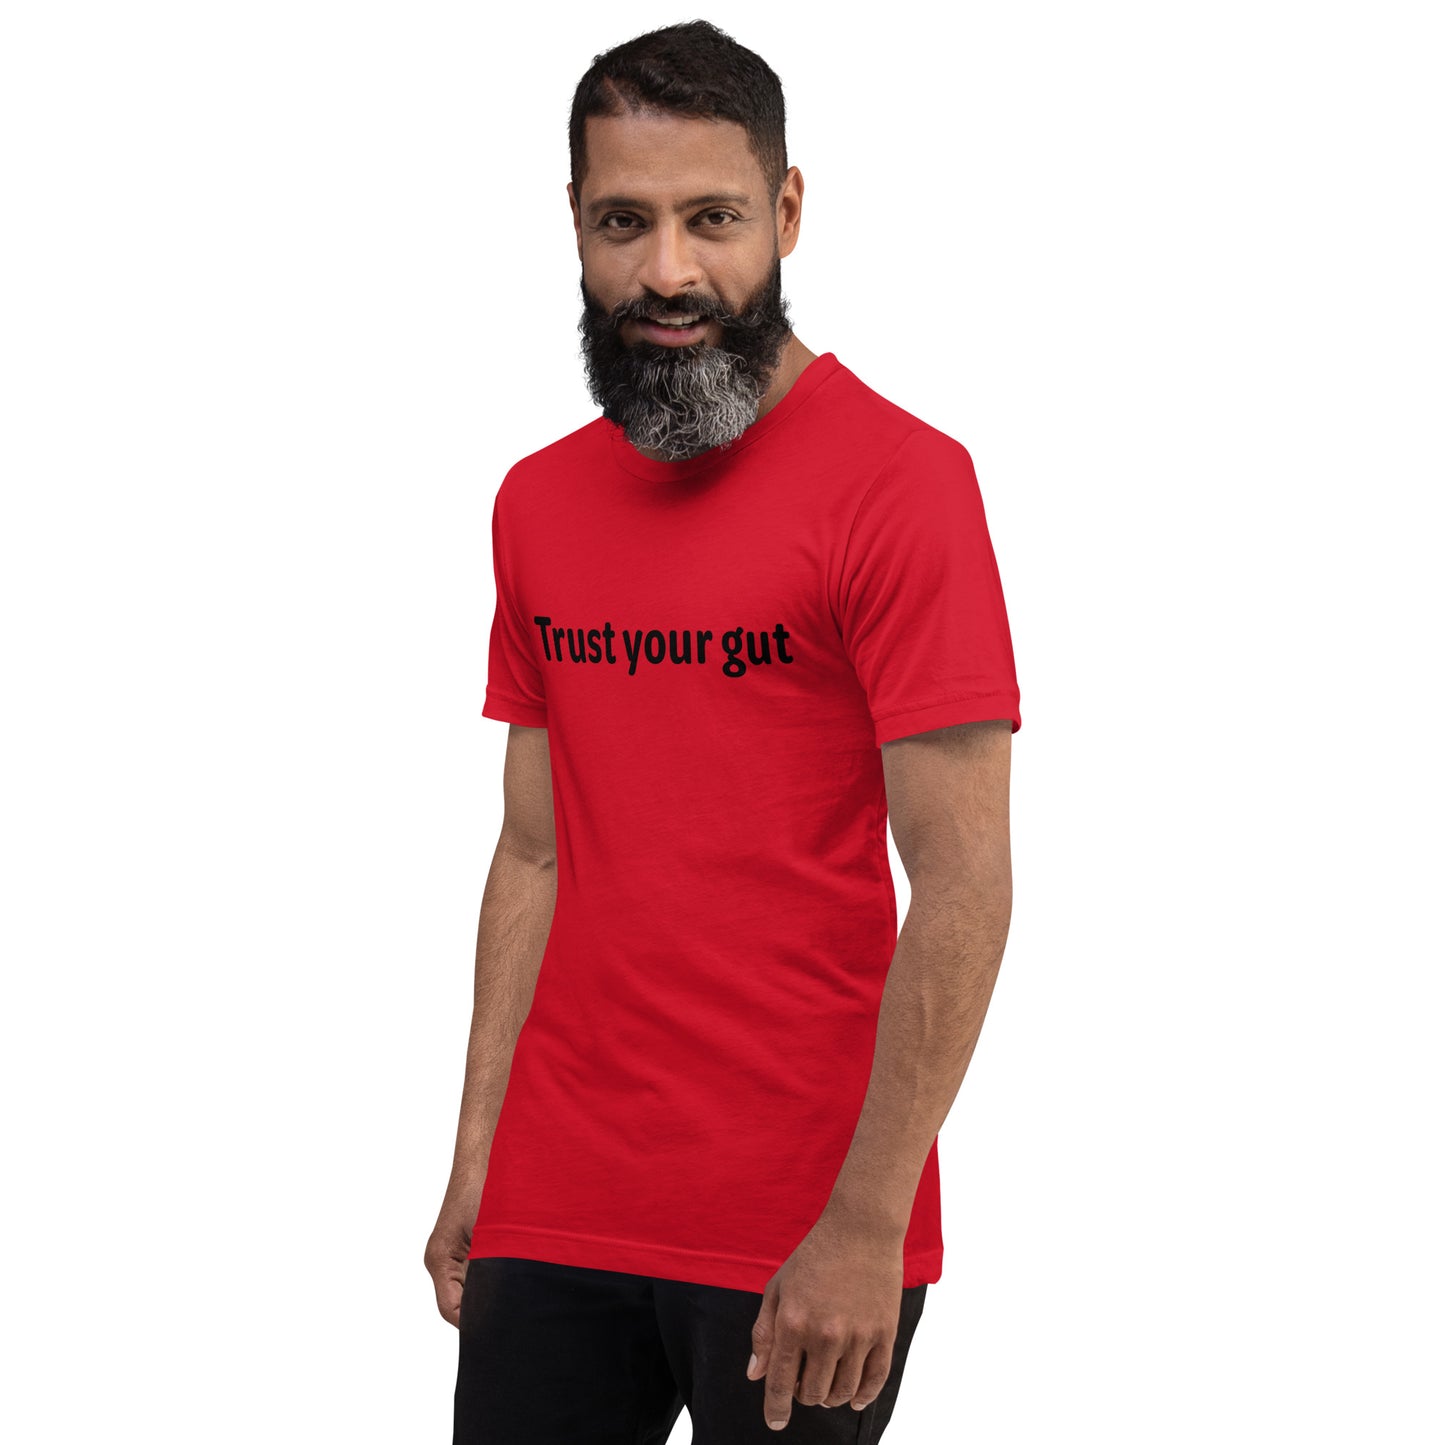 Trust your gut - Black Text - Mens T-Shirt